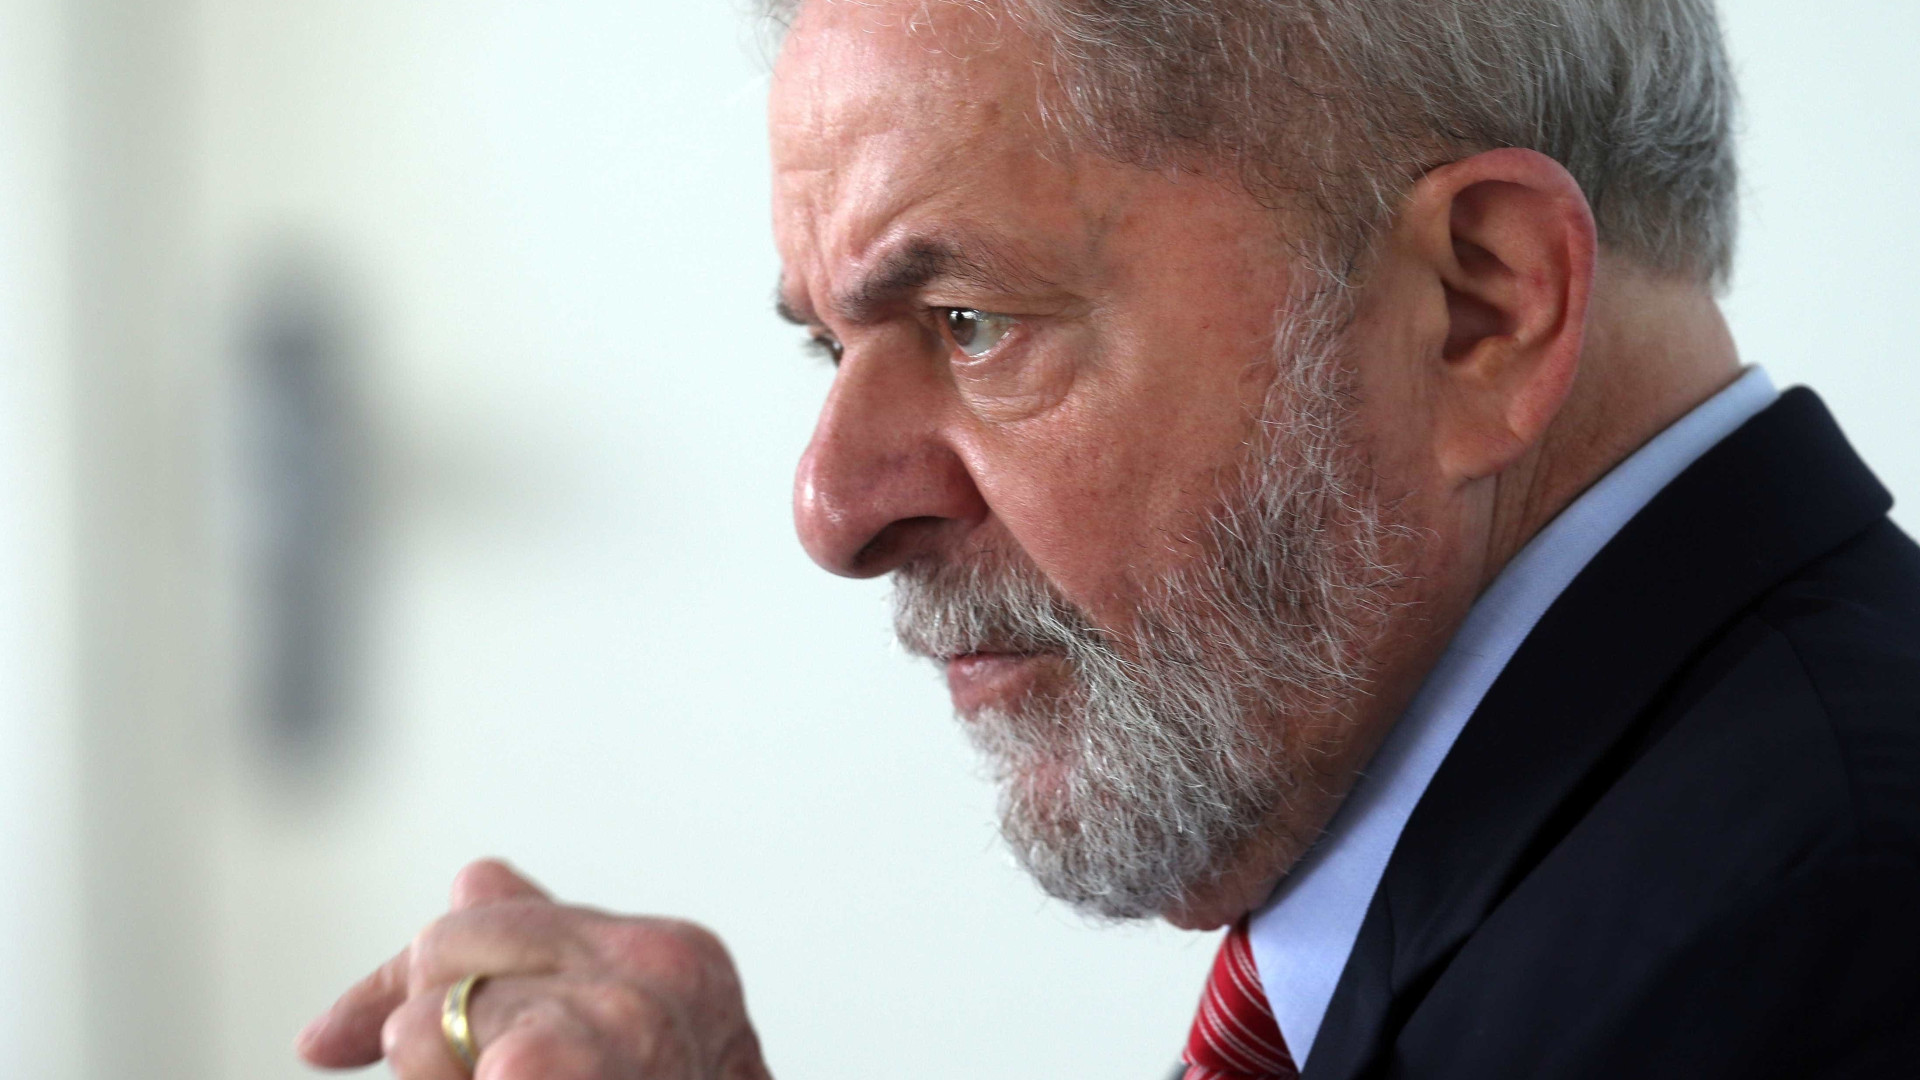 Na Justiça tem muito mau caráter, diz Lula em missa para Marisa Letícia